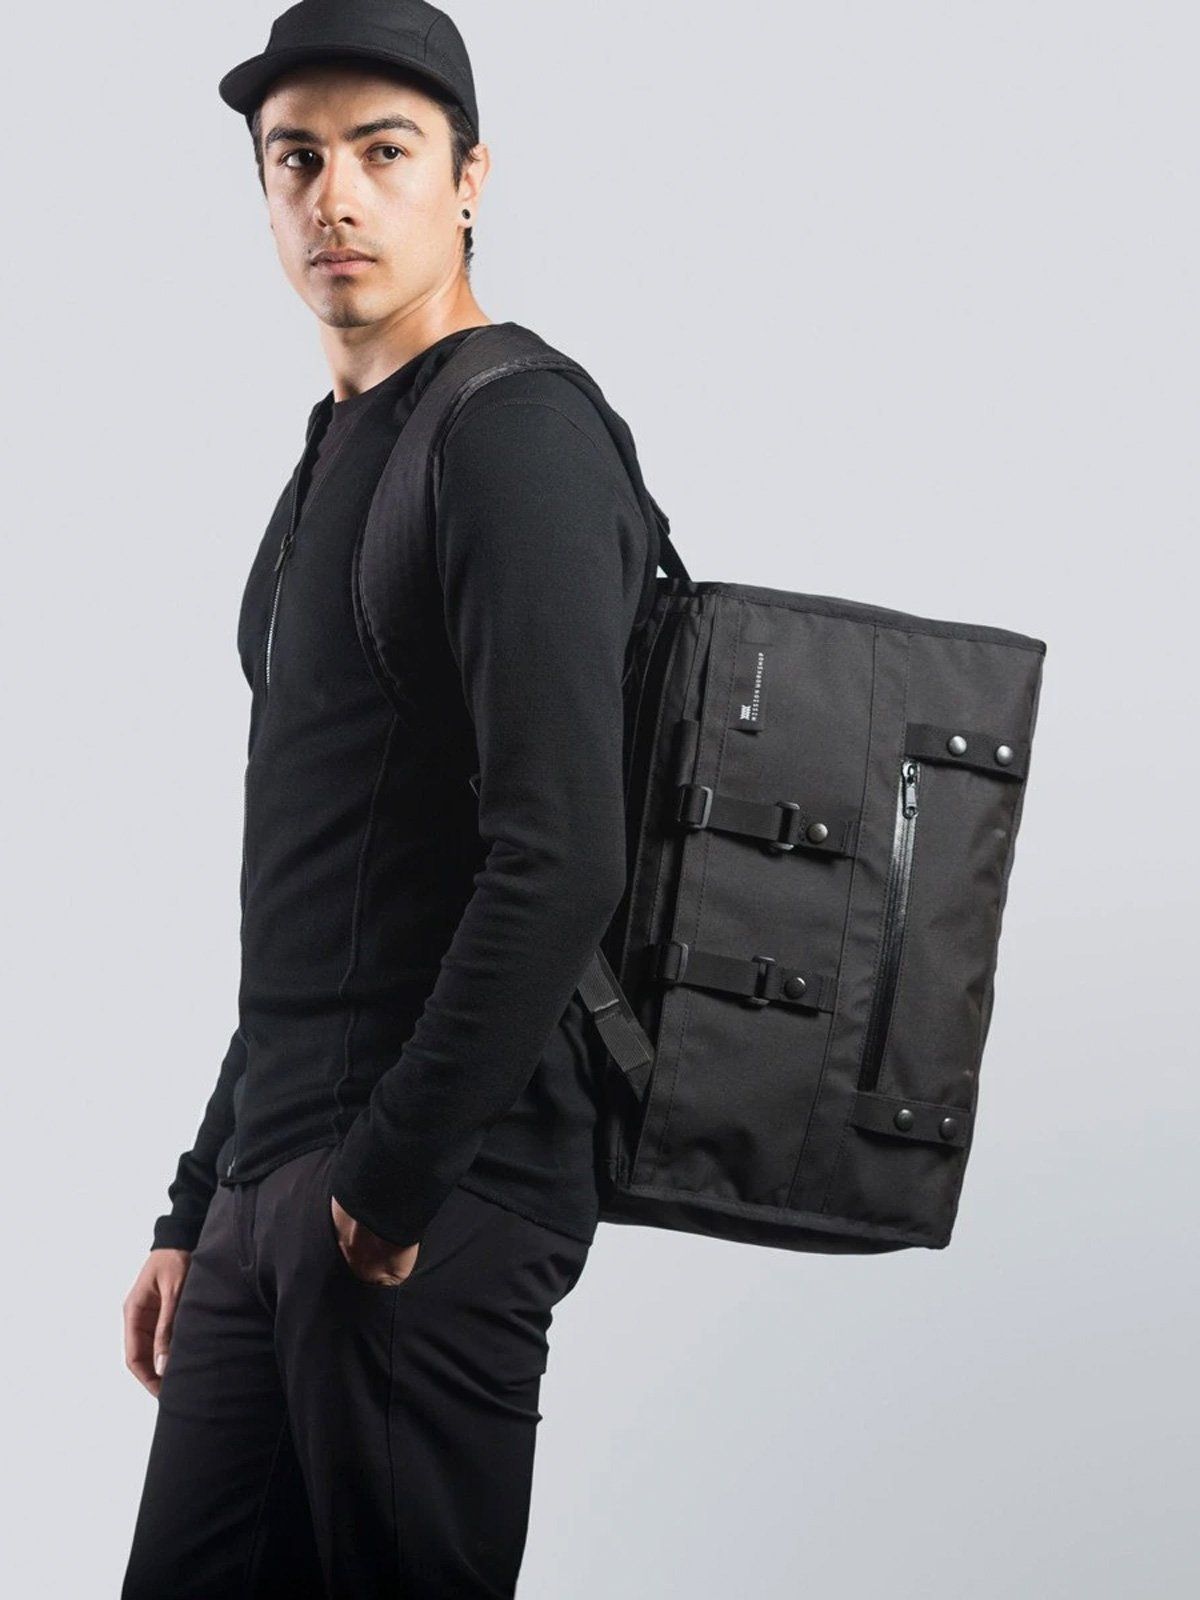 Transit : Duffle Backpack Harness by Mission Workshop - Weatherproof Bags & Technical Apparel - San Francisco & Los Angeles - Construit pour durer - Garanti pour toujours